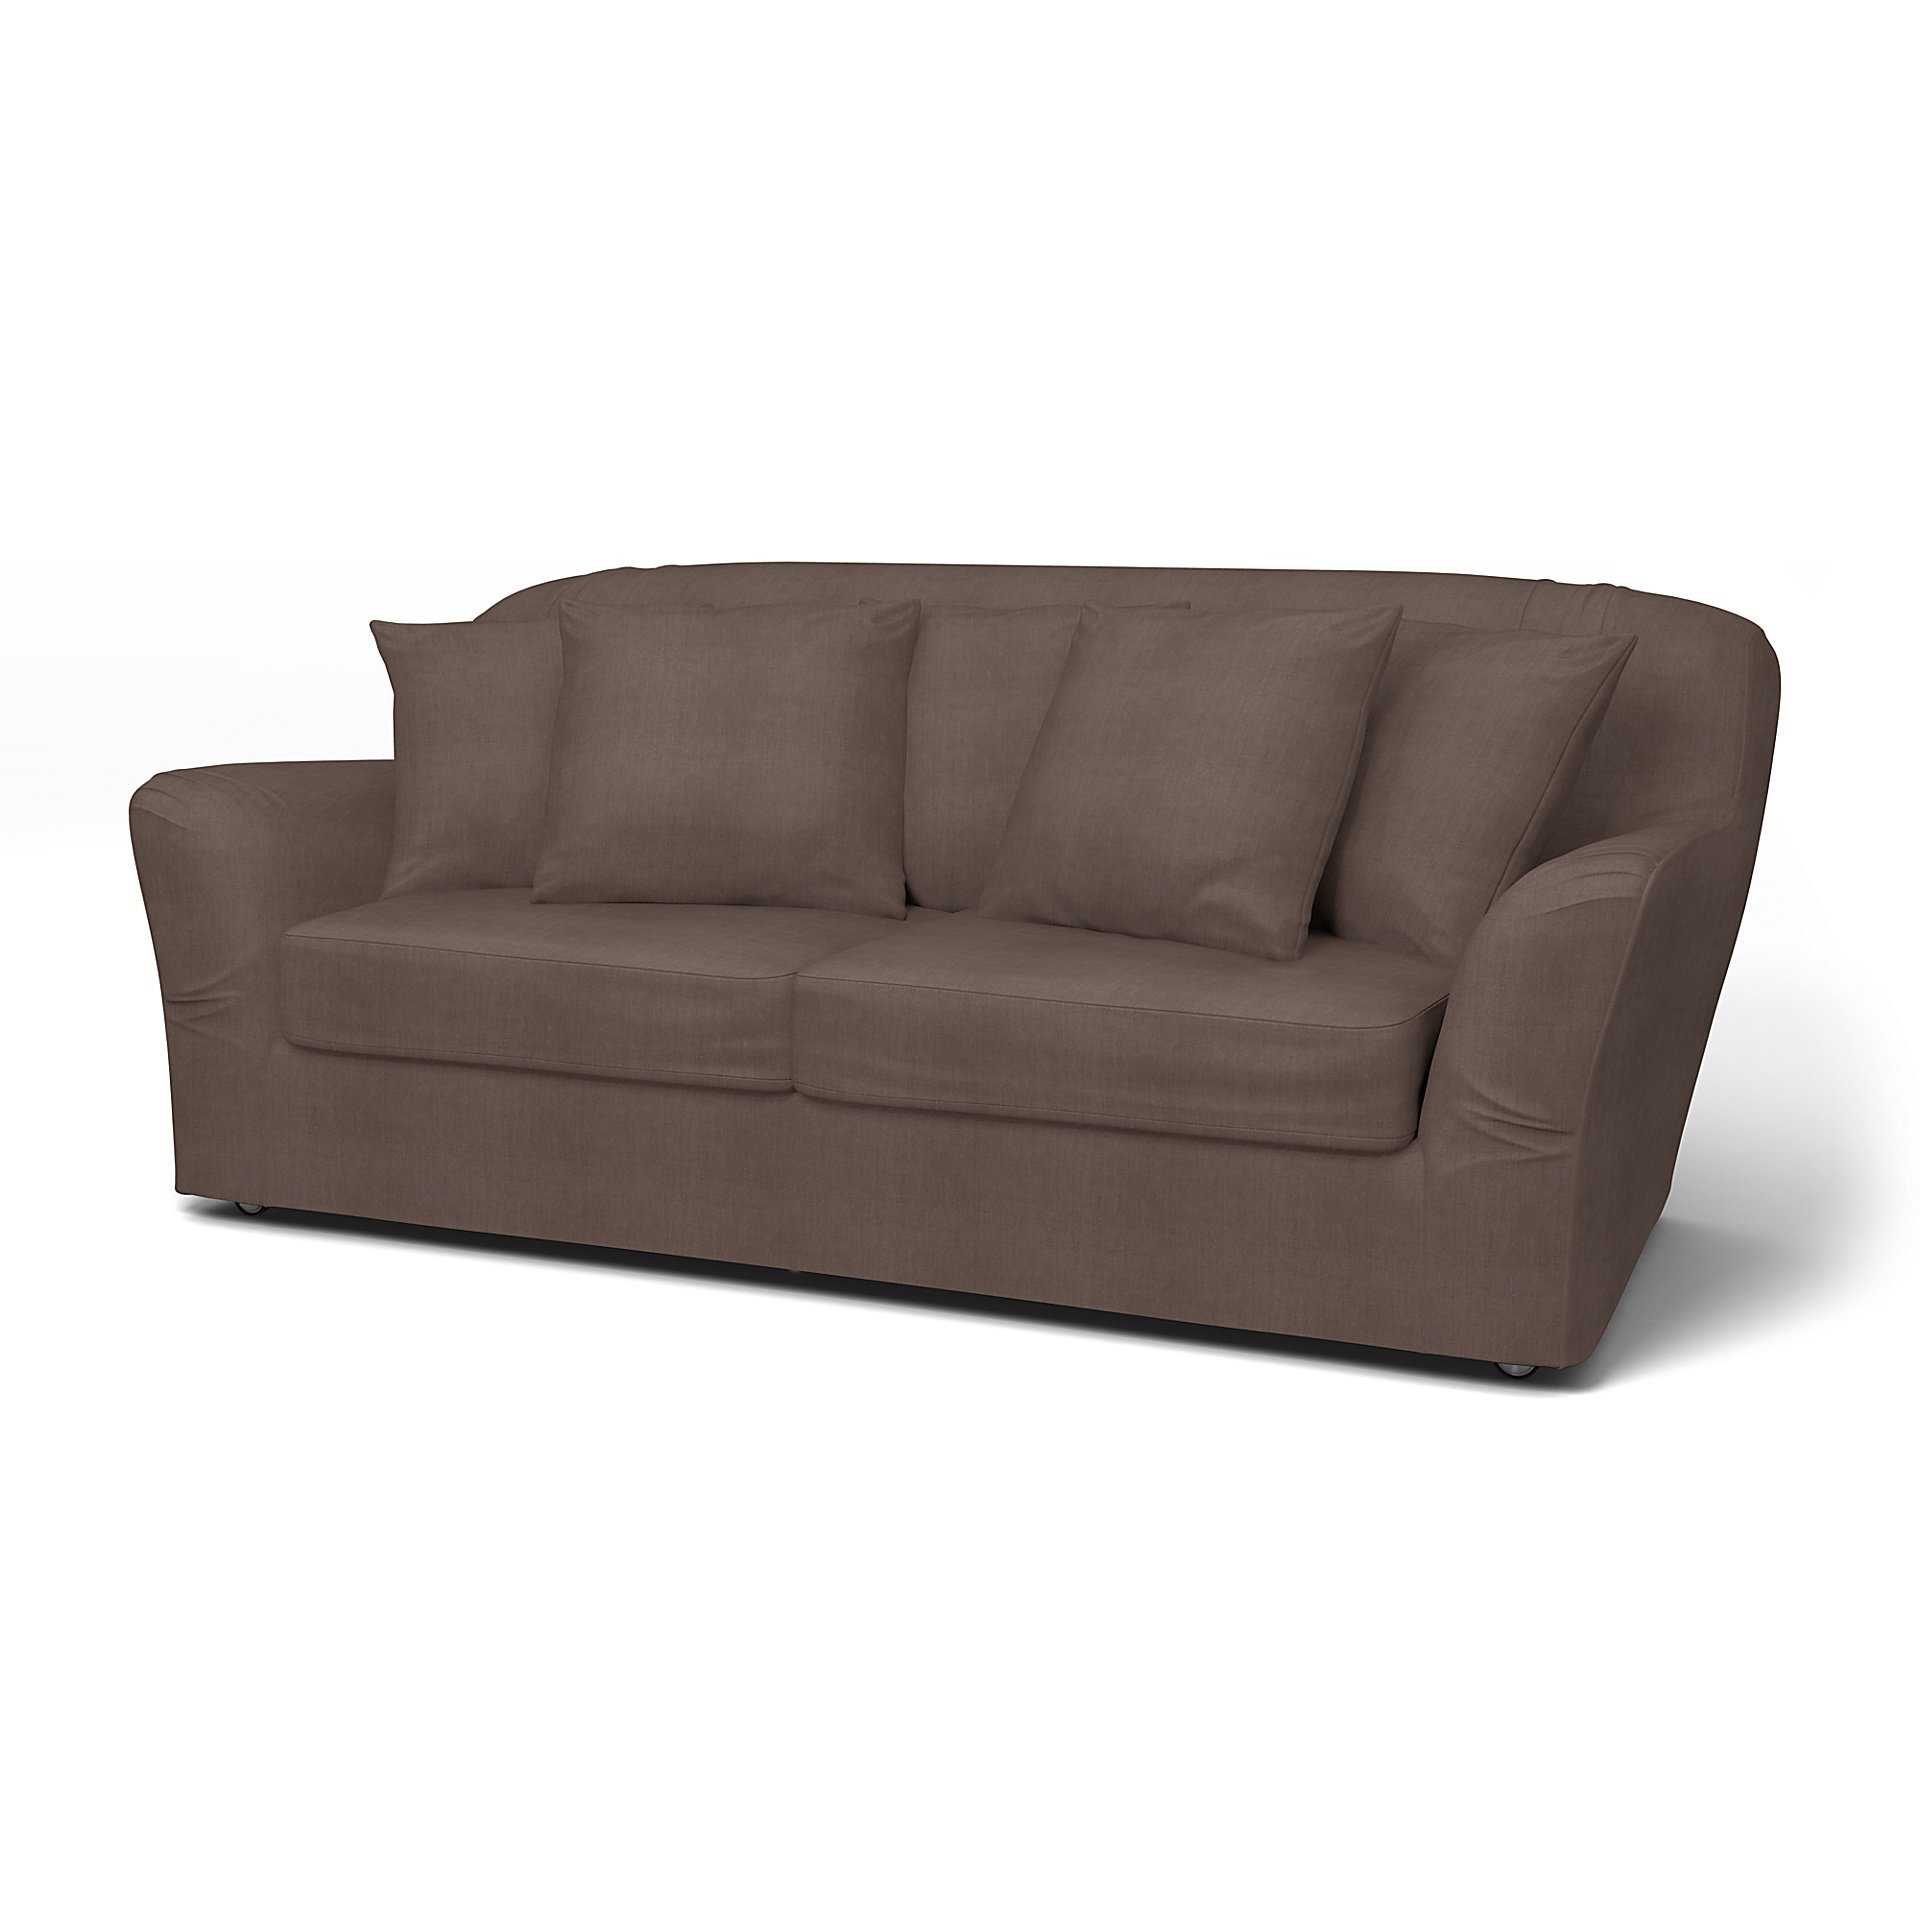 IKEA - Tomelilla sofa bed (Standard model), Cocoa, Linen - Bemz